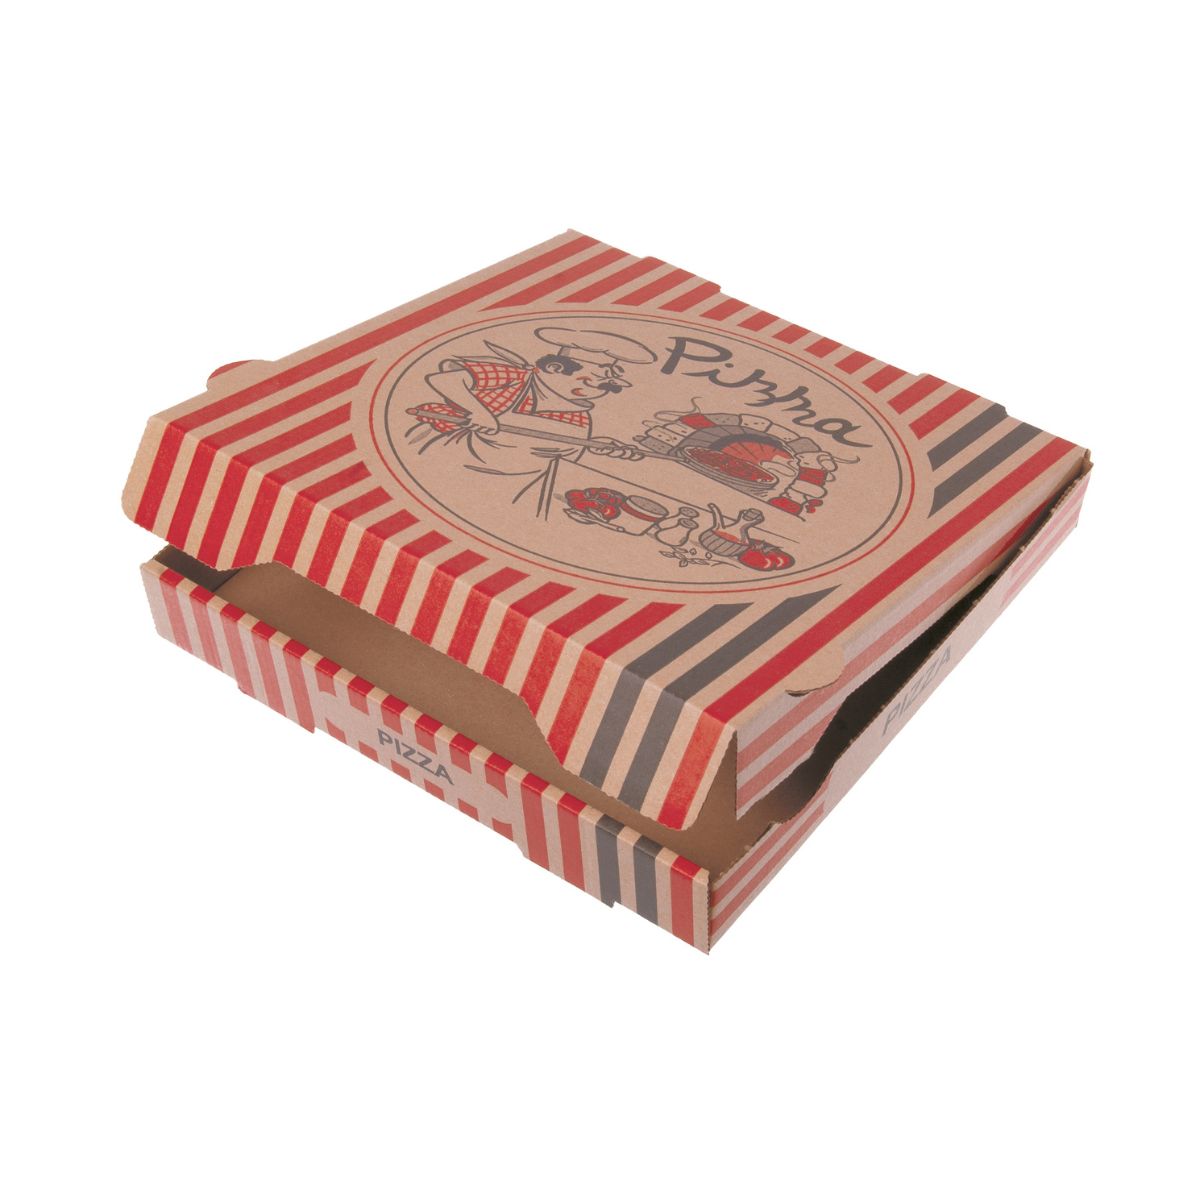 Pizzabox 24x24x4cm | Kraft rot-braun